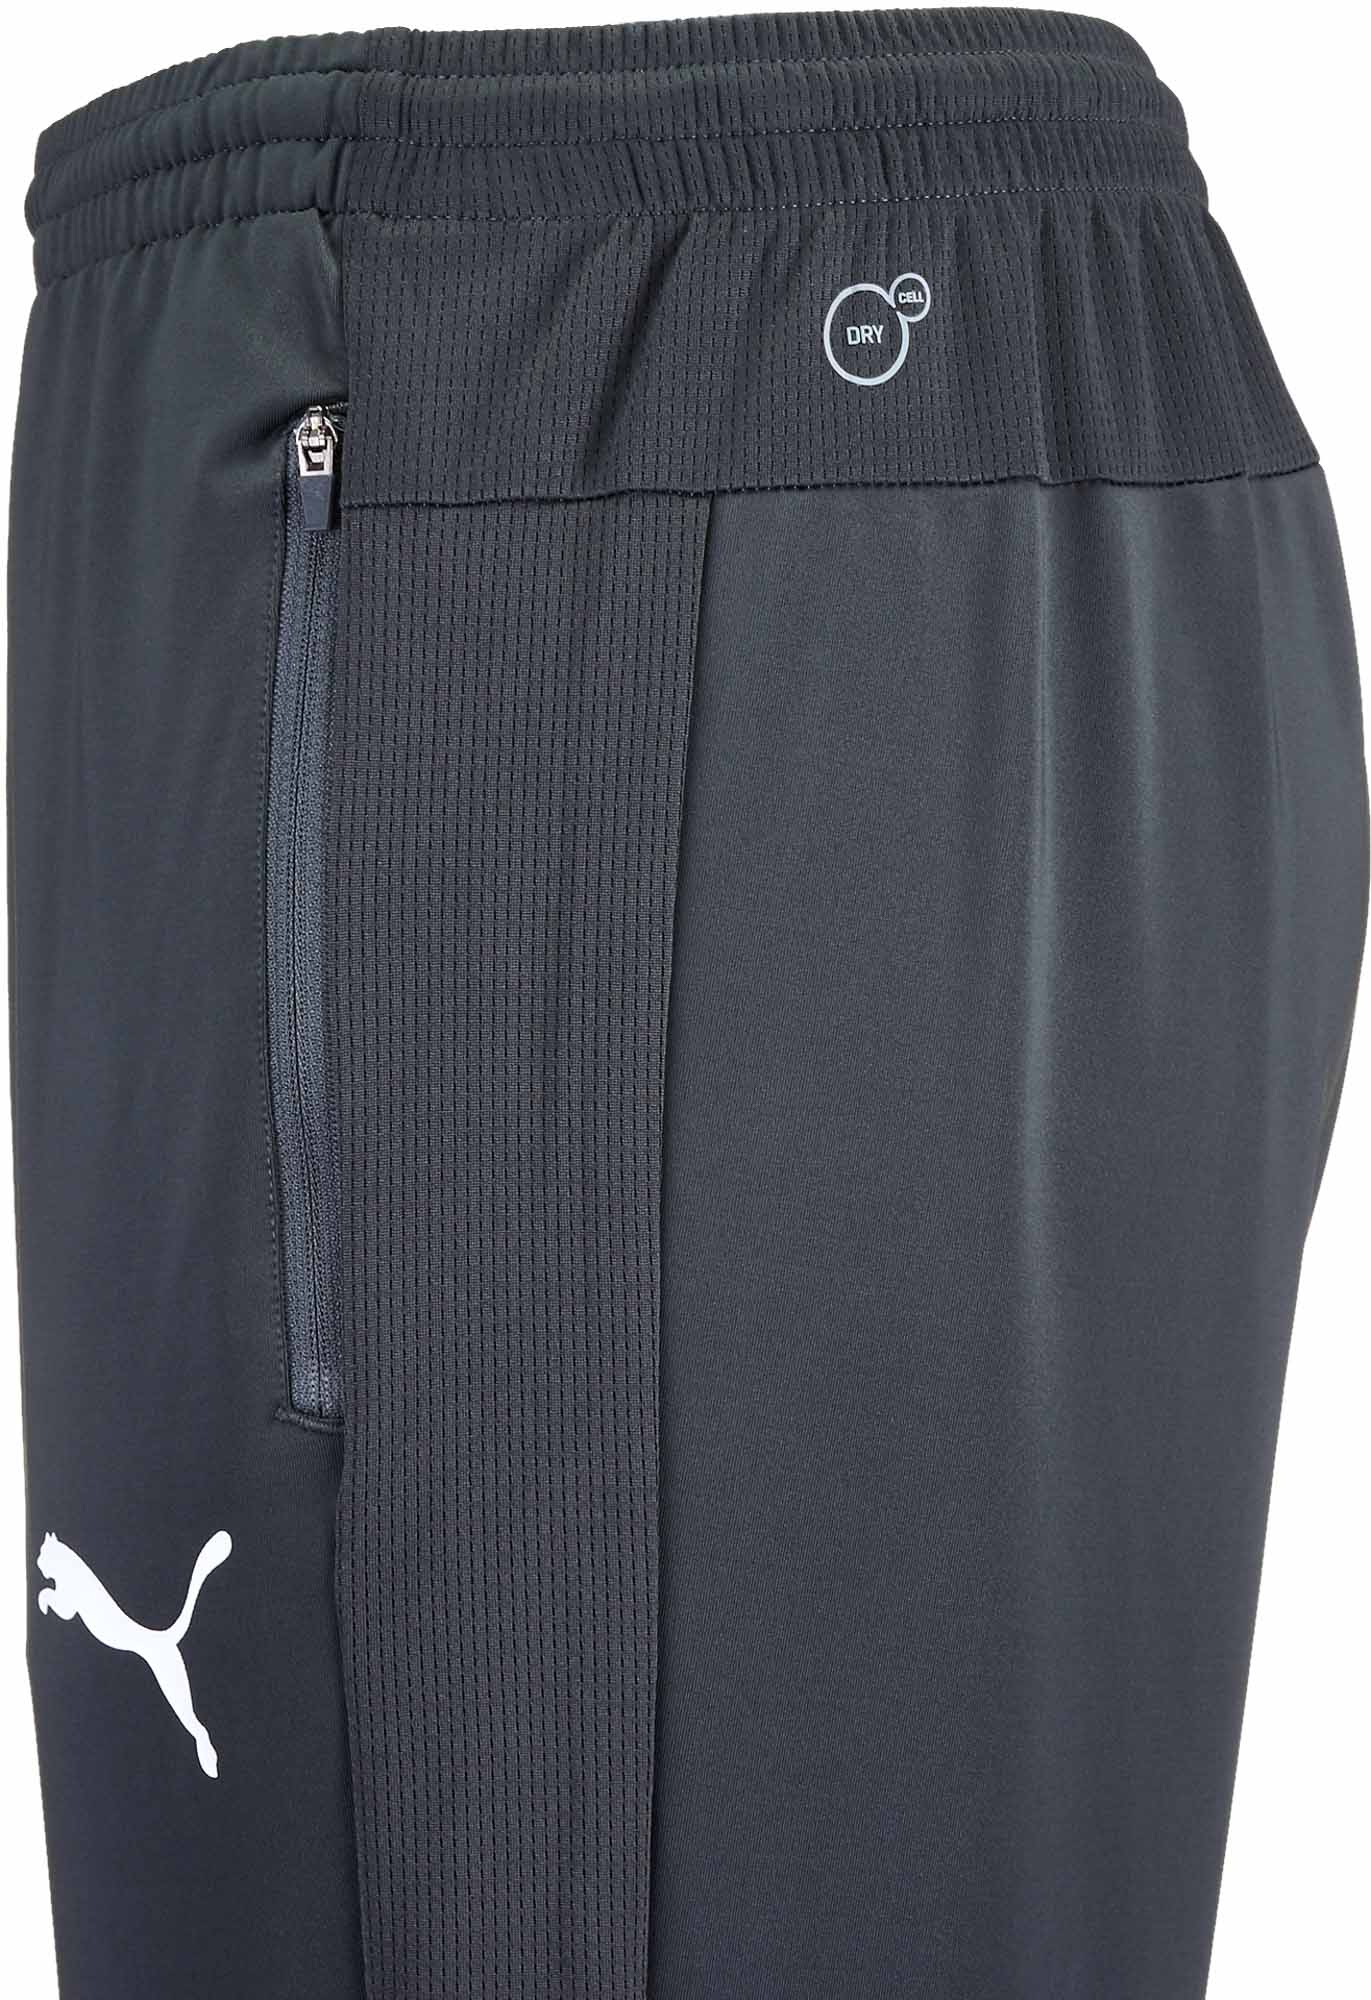 puma youth soccer shorts